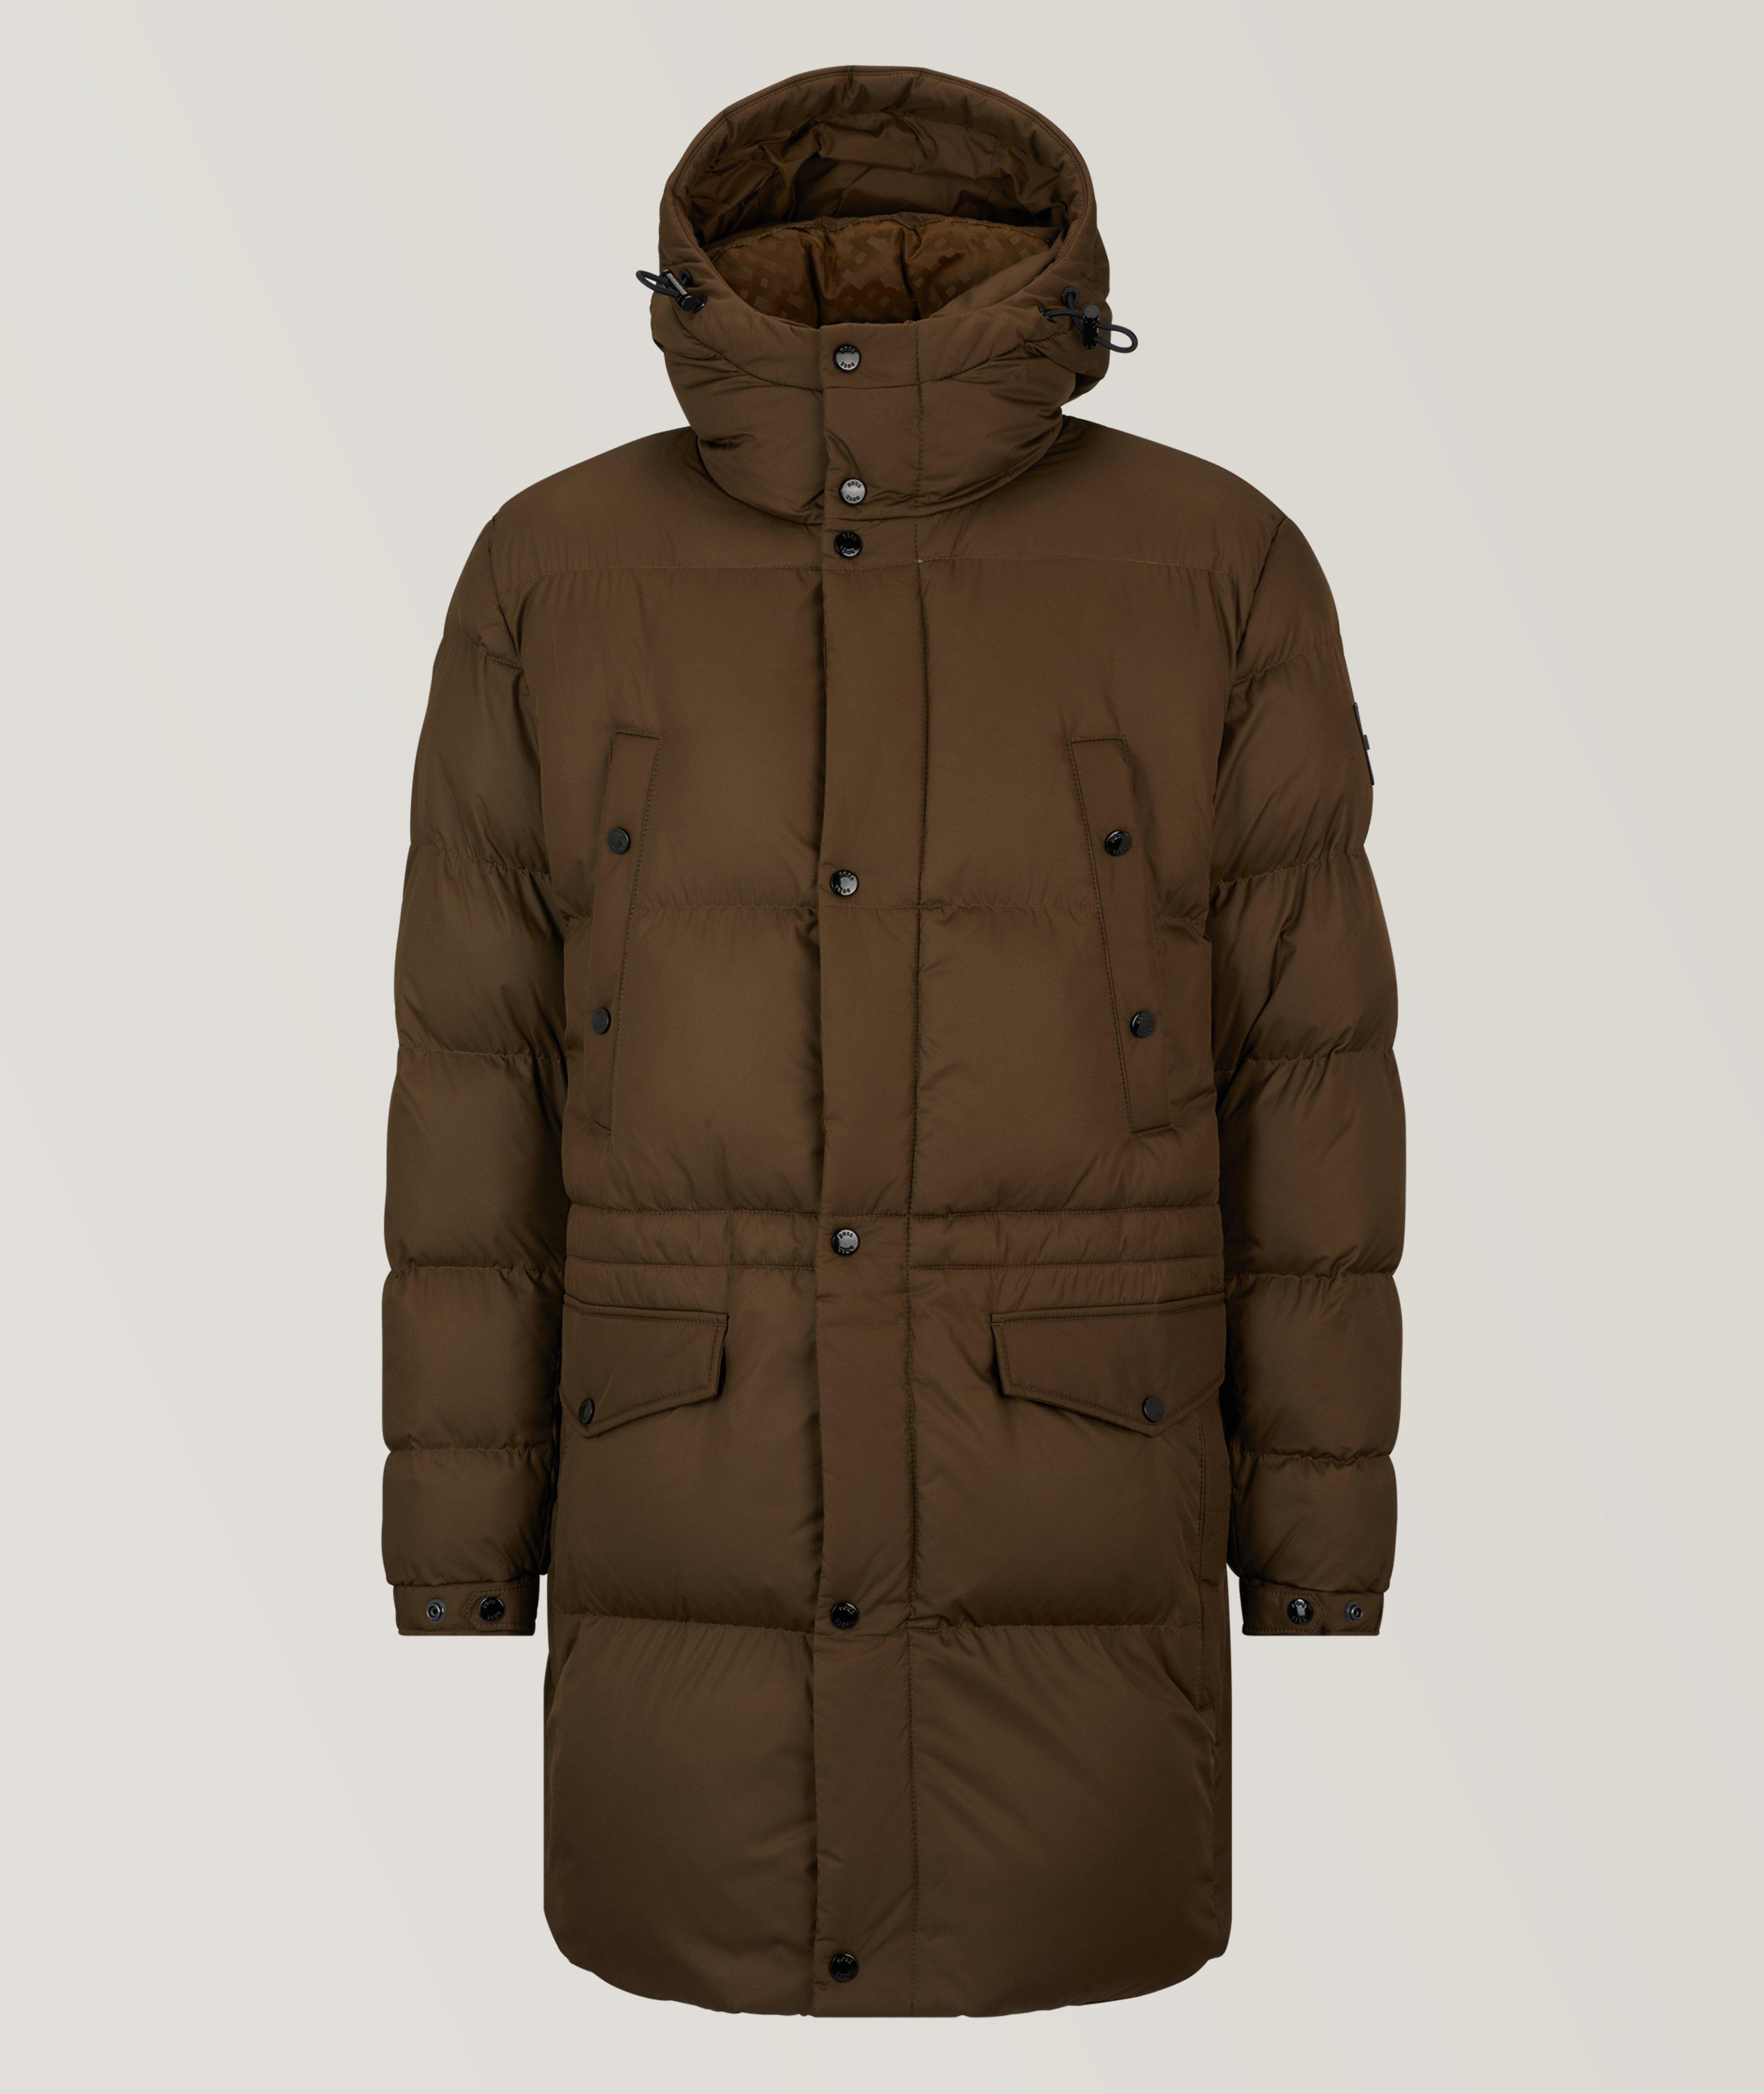 BOSS - Hooded jacket in lightweight water-repellent fabric